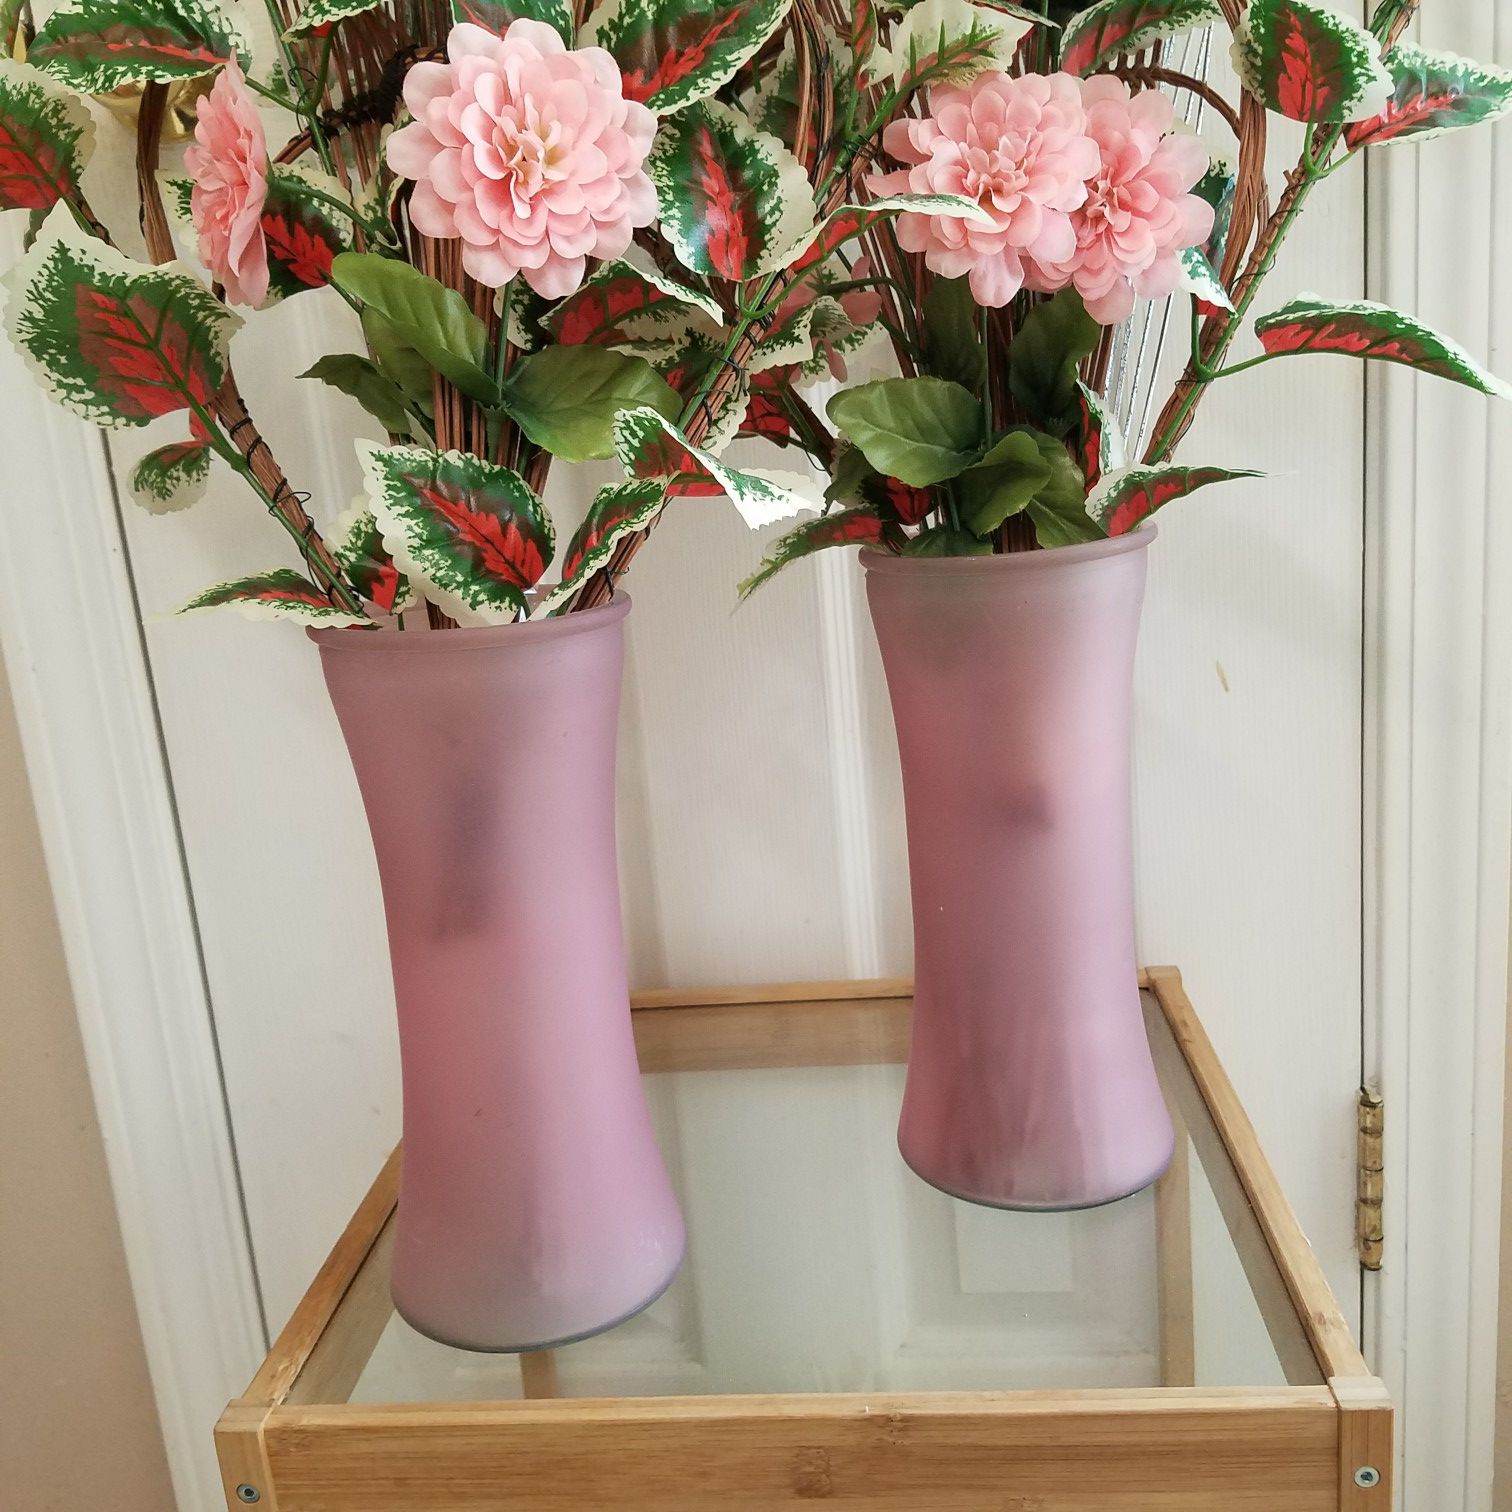 2 Pink Glass Vase with floral arrangements